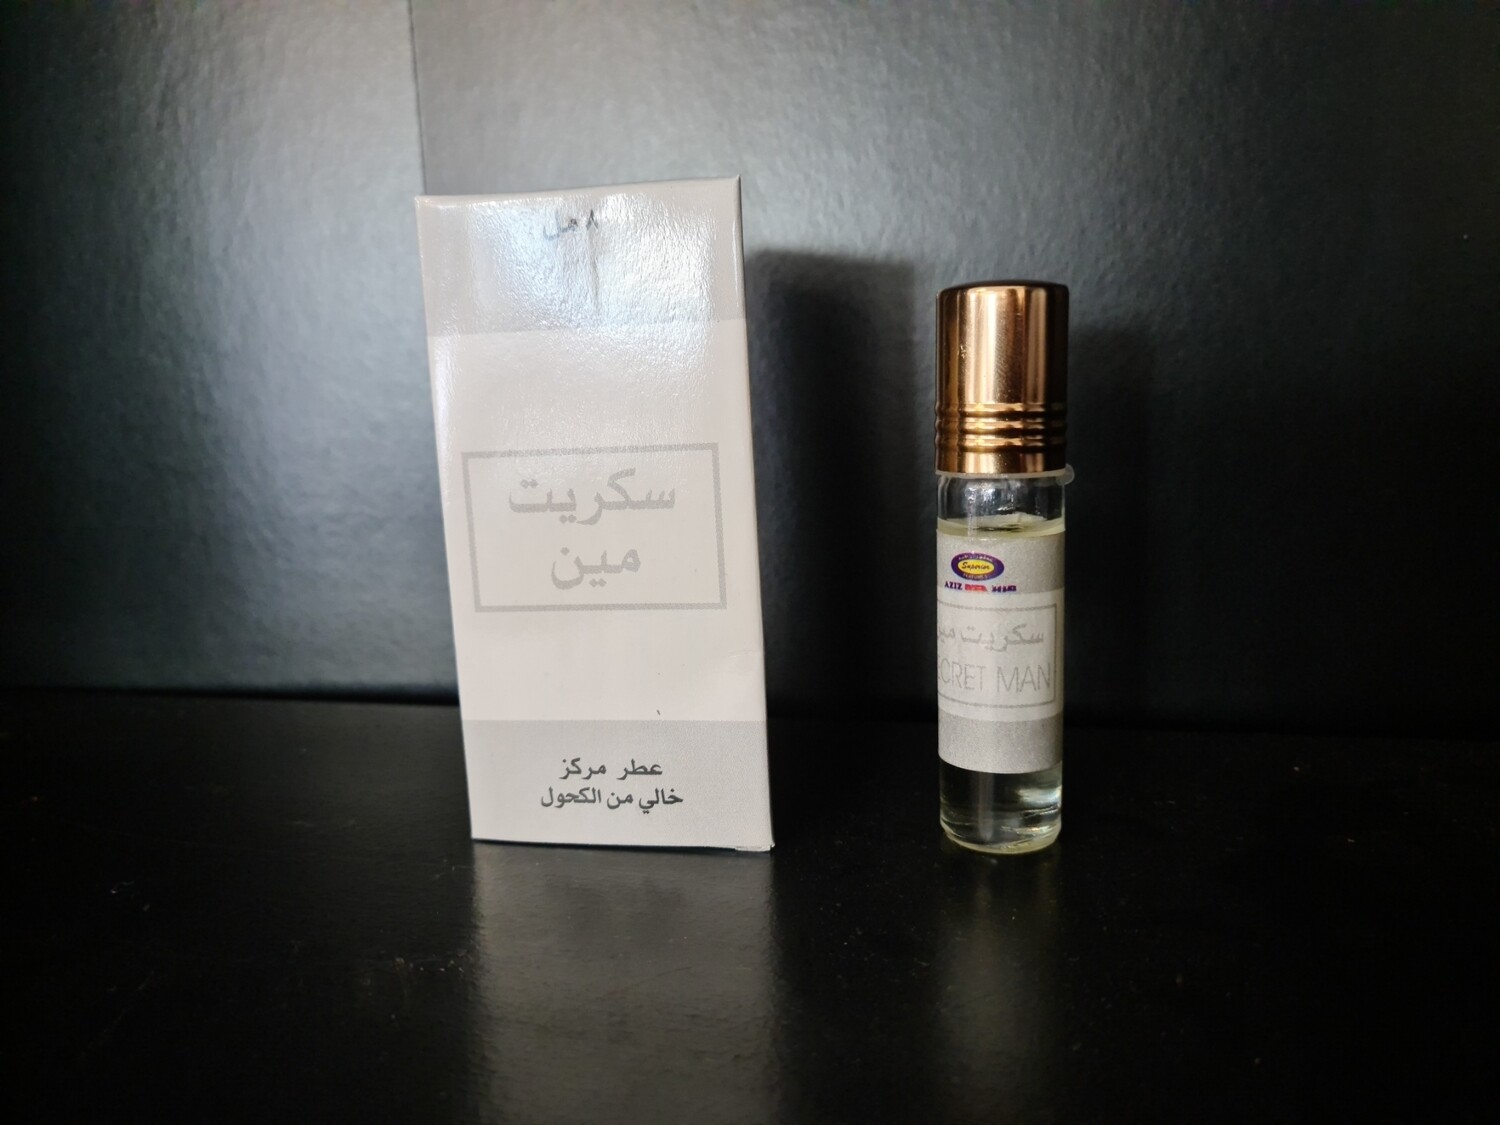 Aziz perfumes jeddah Secret man 8 ml roller